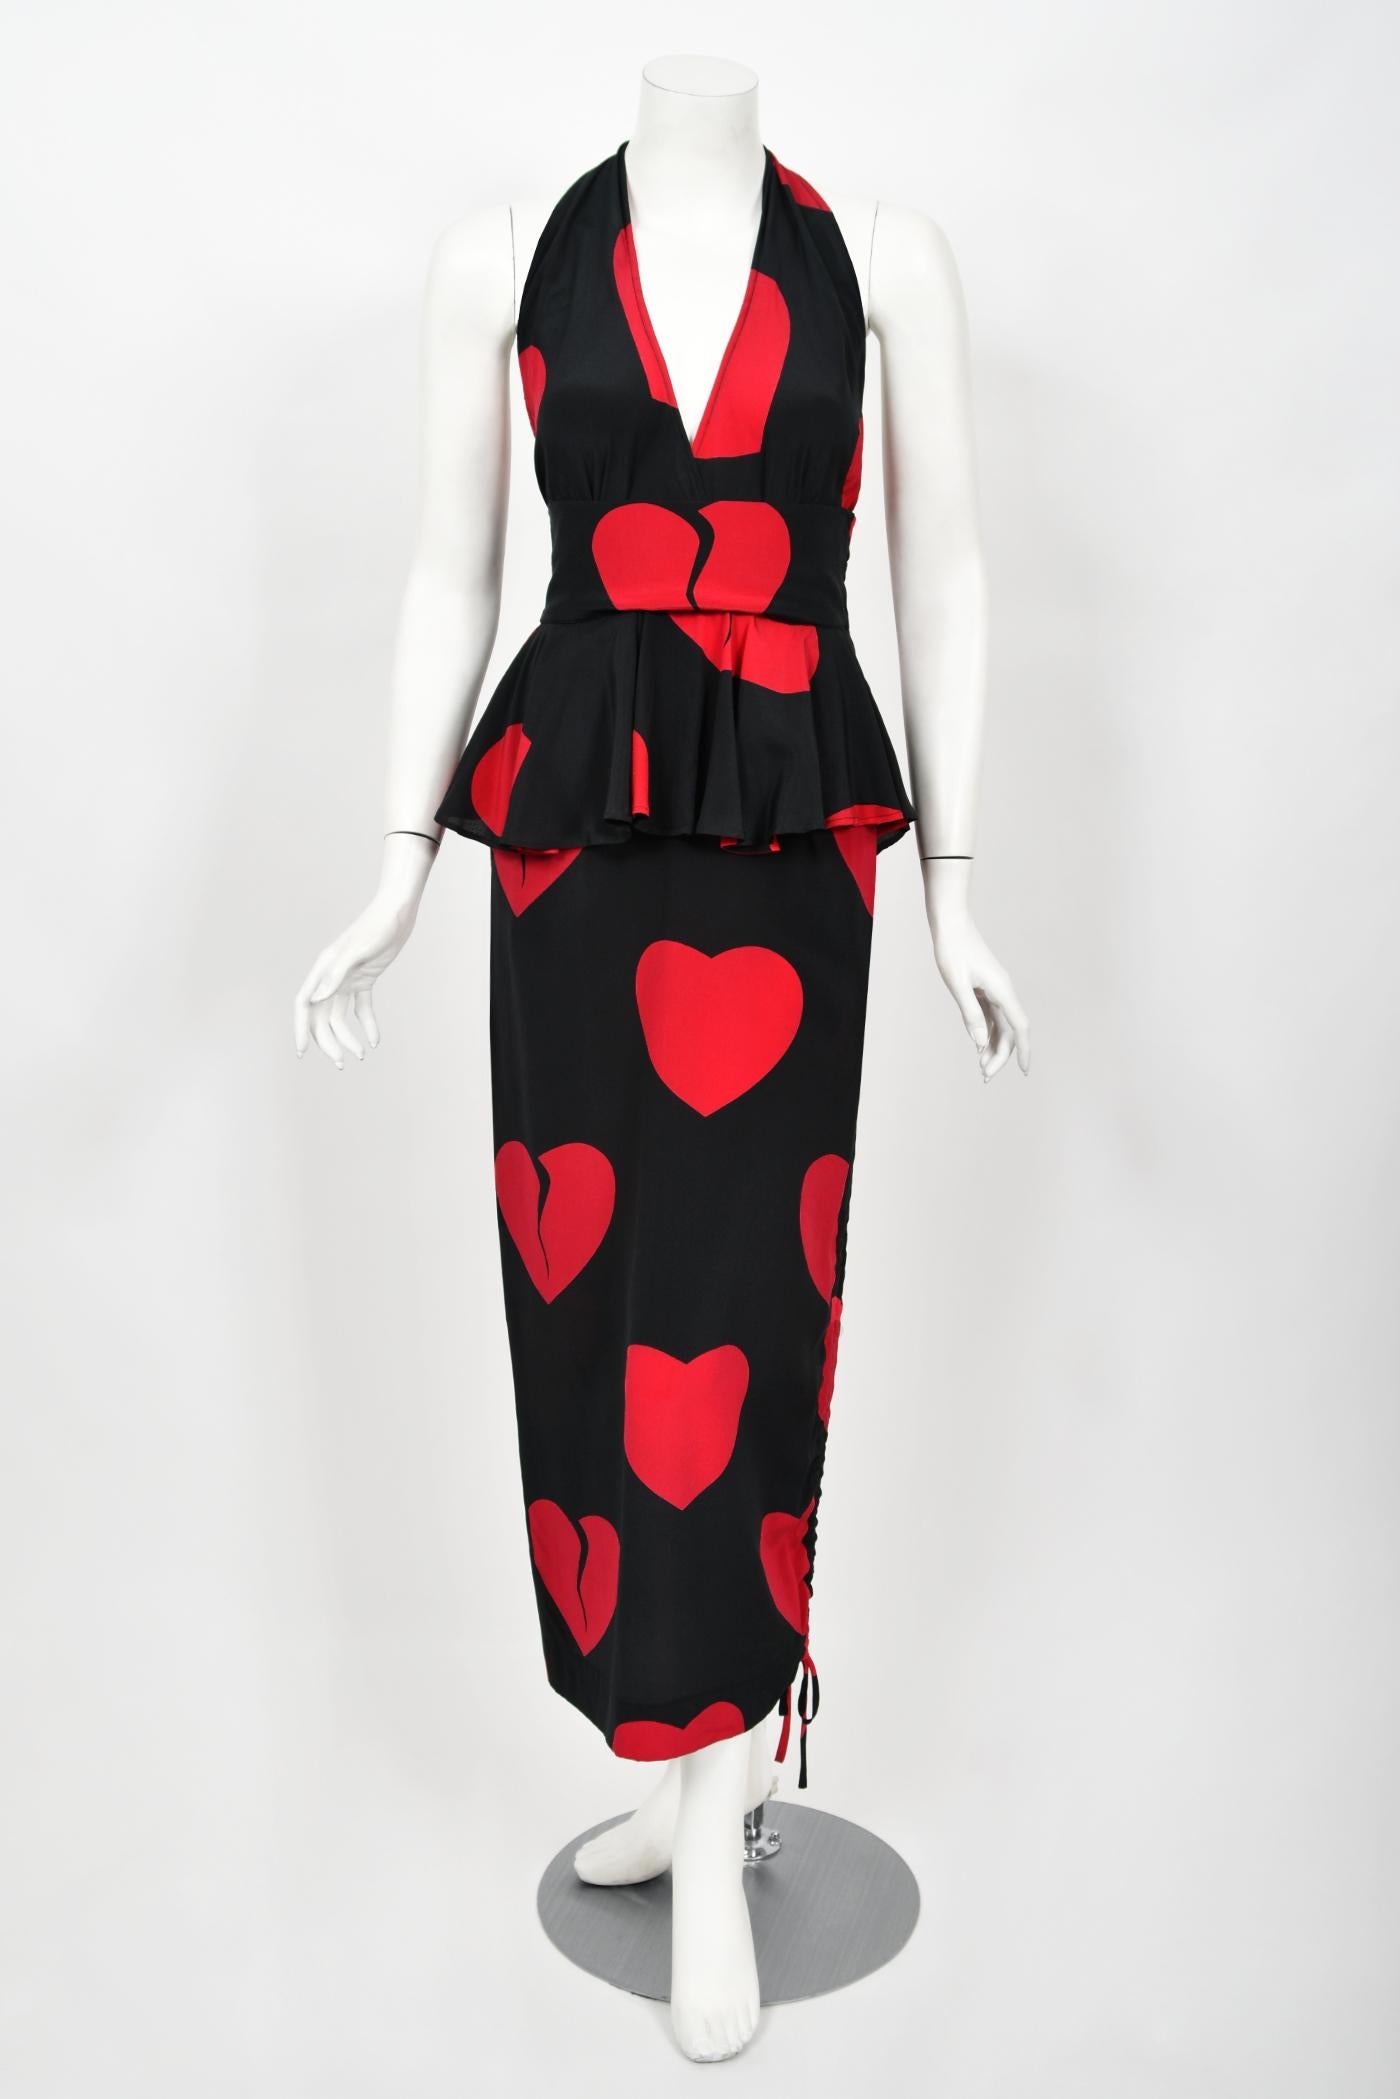 Robe convertible Moschino Couture documentée « Heartbreaker » en soie imprimée, 1994  en vente 3